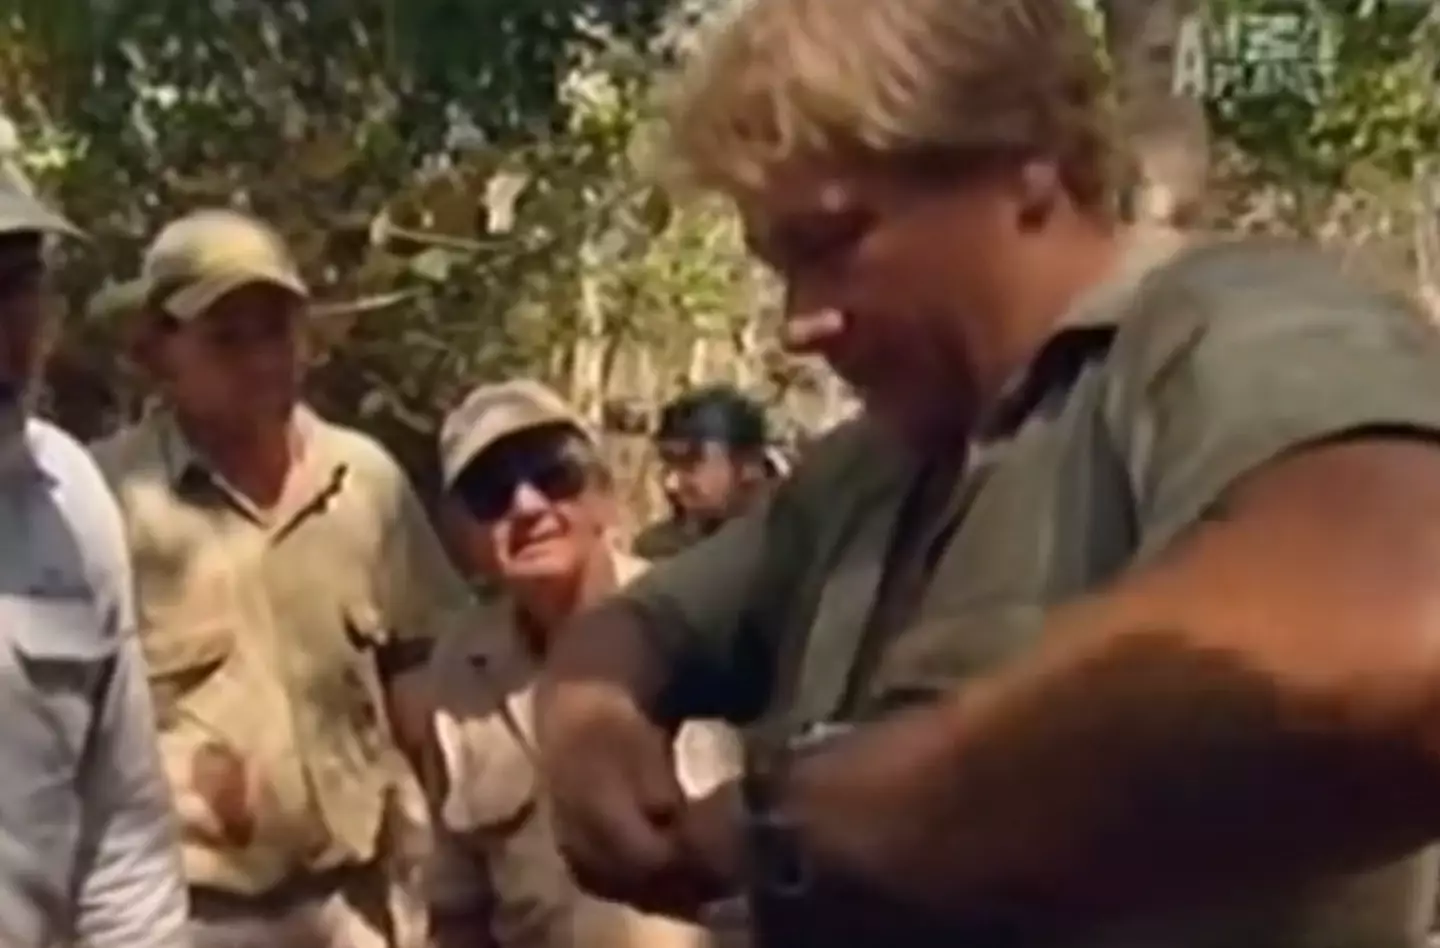 Steve Irwin broke his finger during filming.